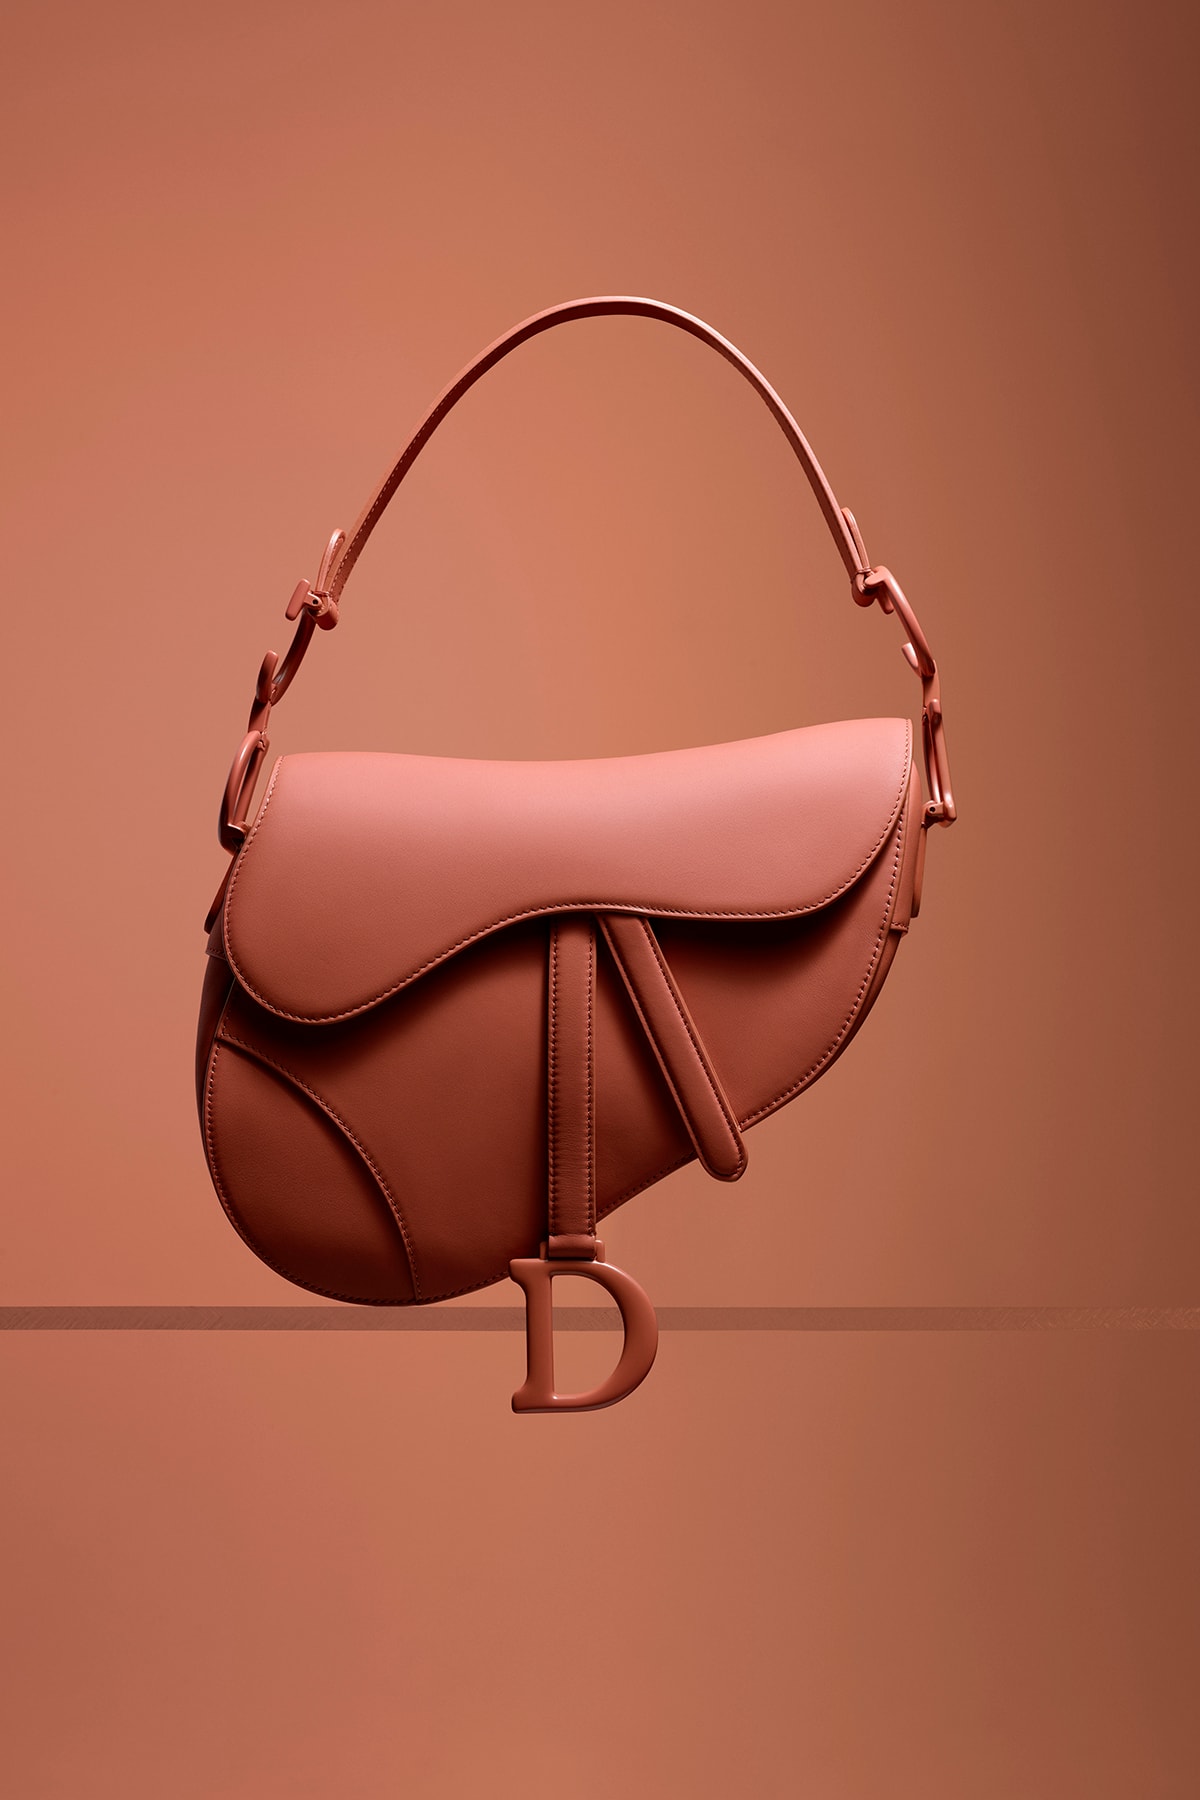 Dior Saddle Bag men style  Dior saddle bag, King fashion